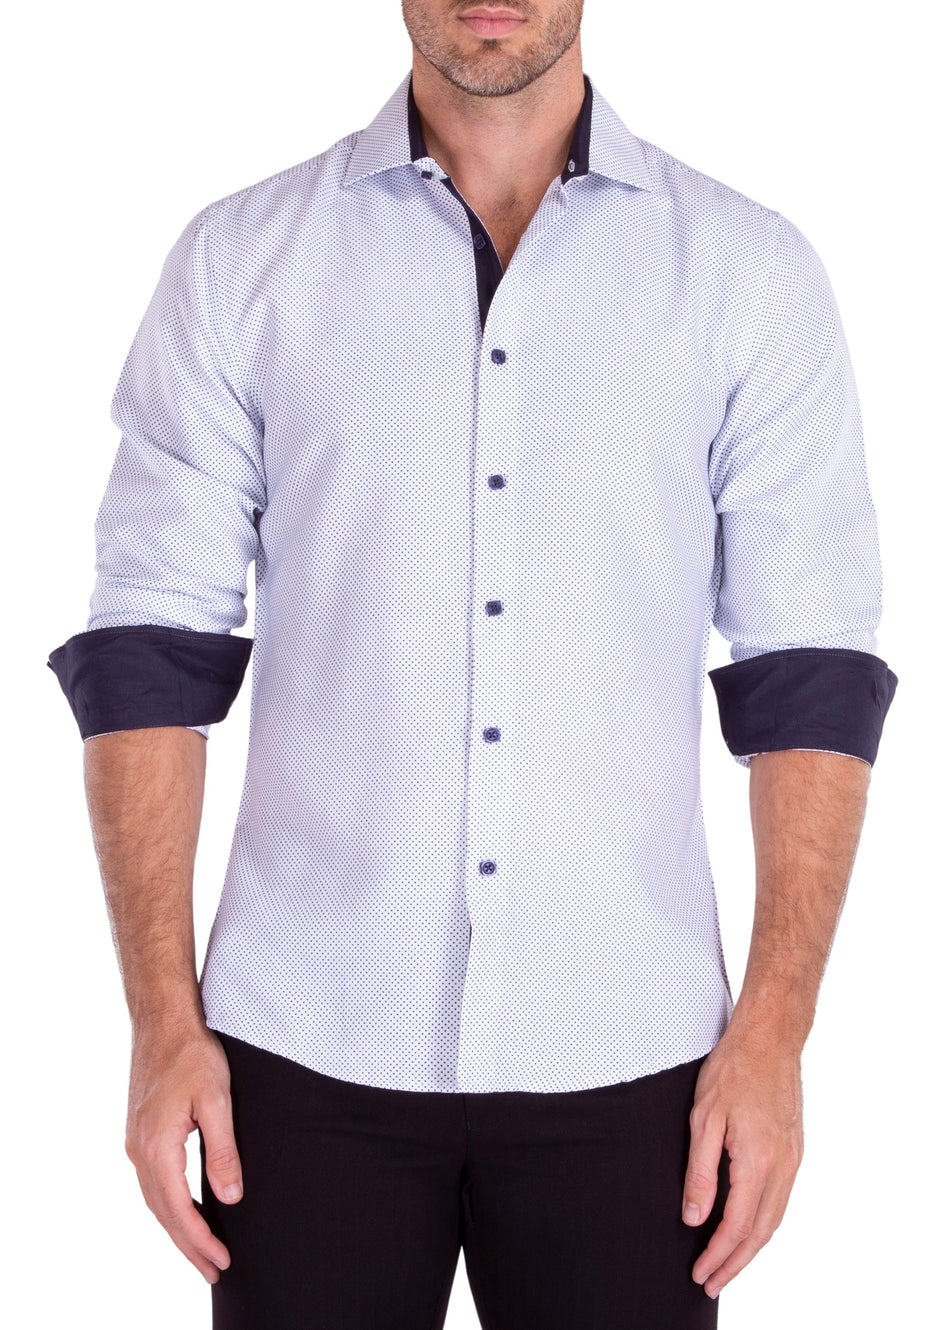 212395 - White Long Sleeve Shirt